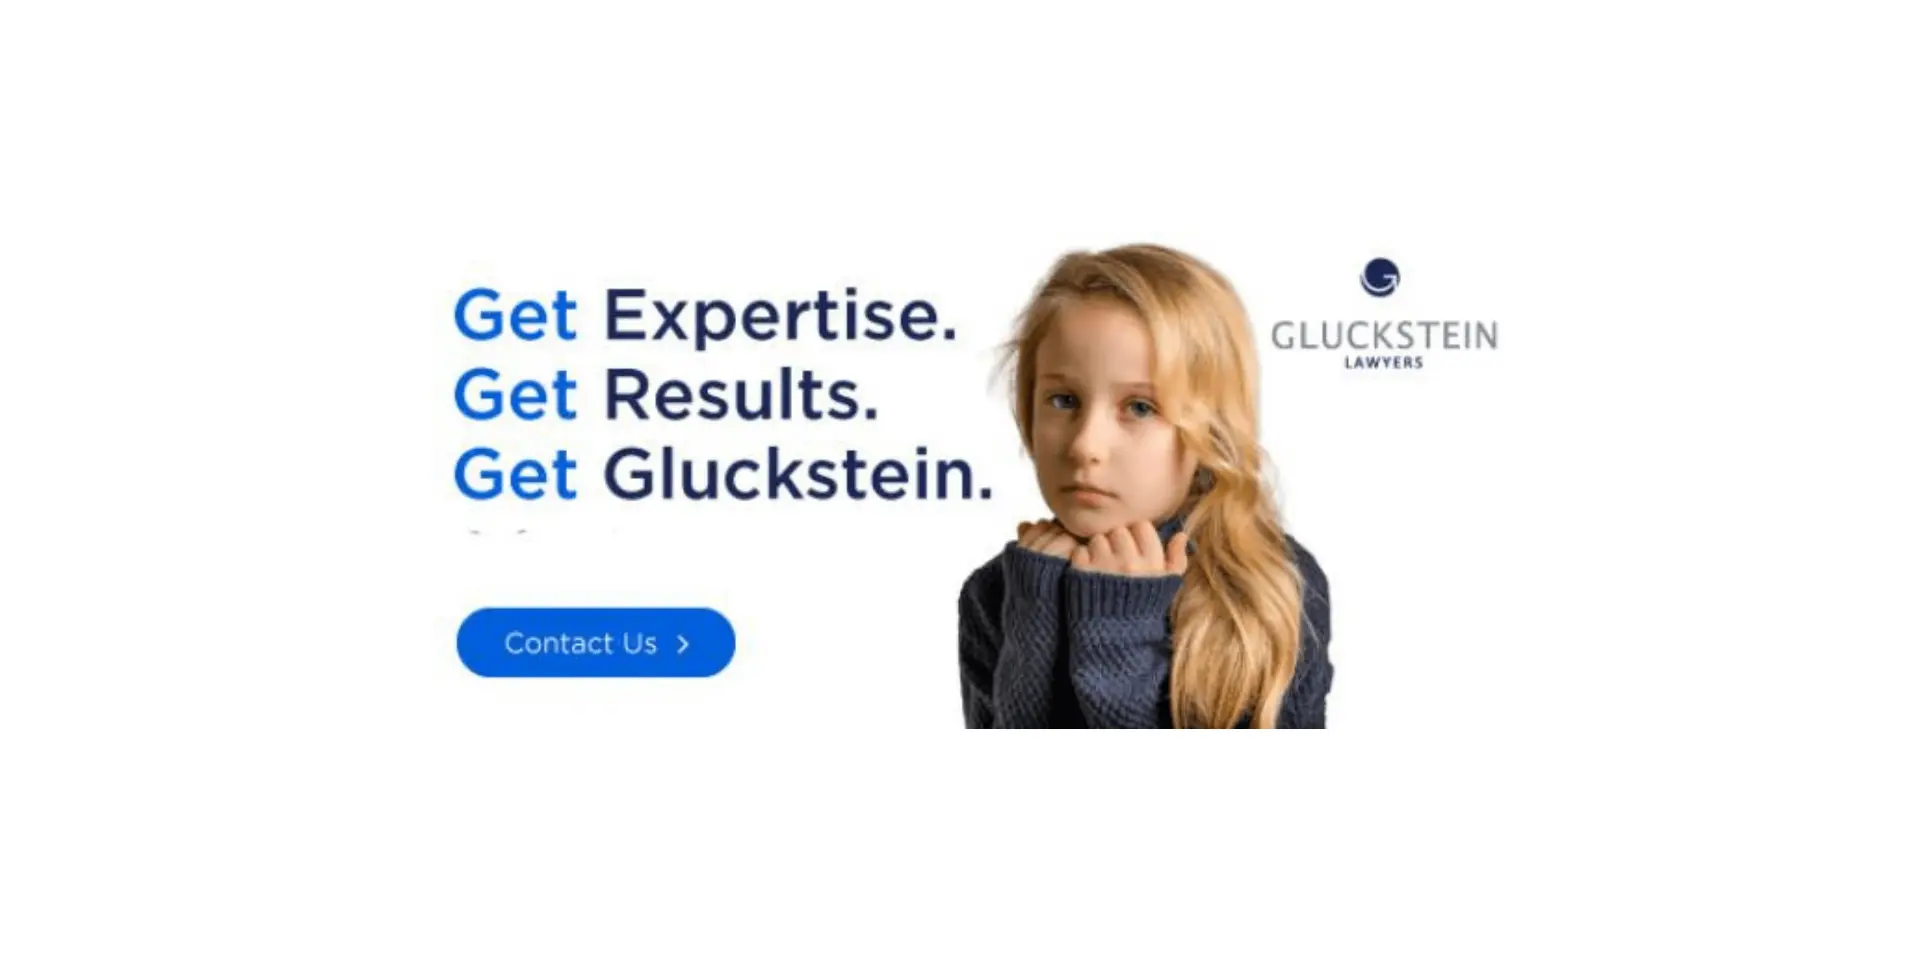 Gluckstein Lawyers launches a new website. Get Expertise. Get Results. Get Gluckstein.